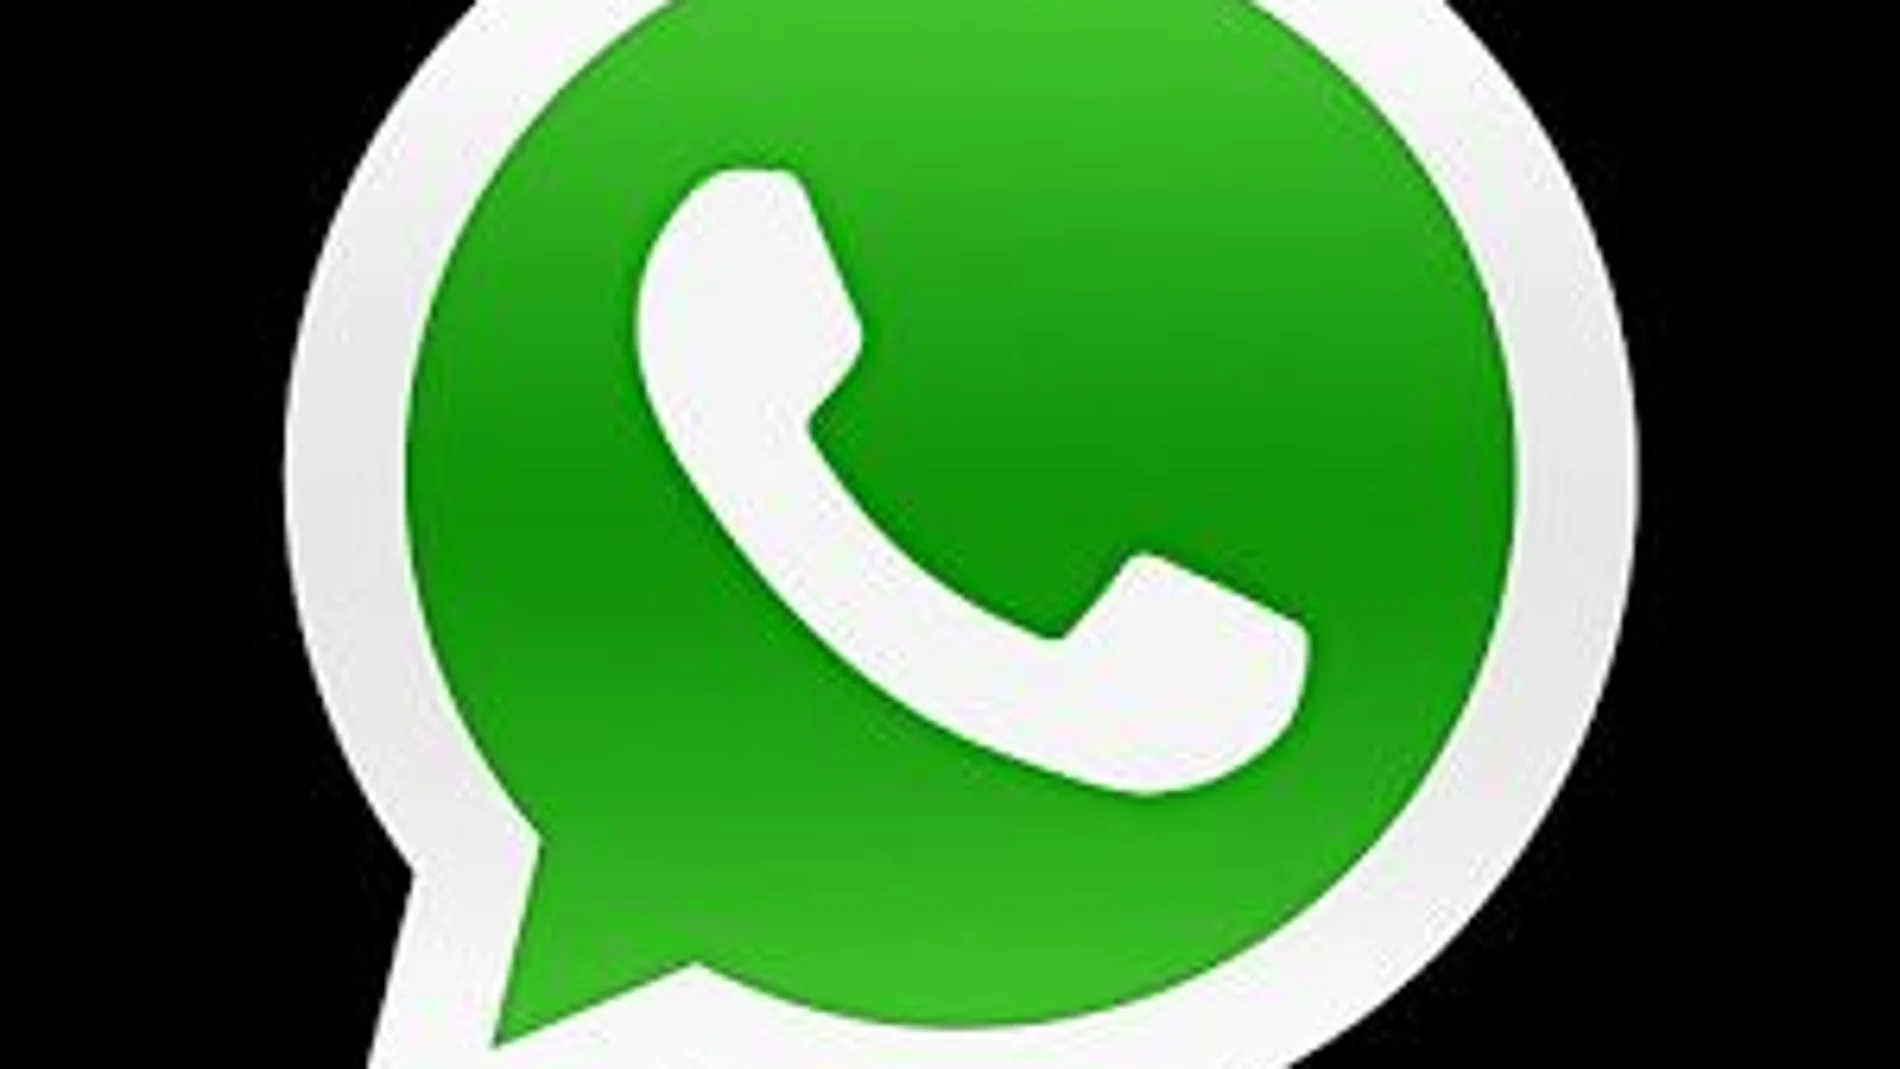 WhatsApp se actualiza con mensajes de voz